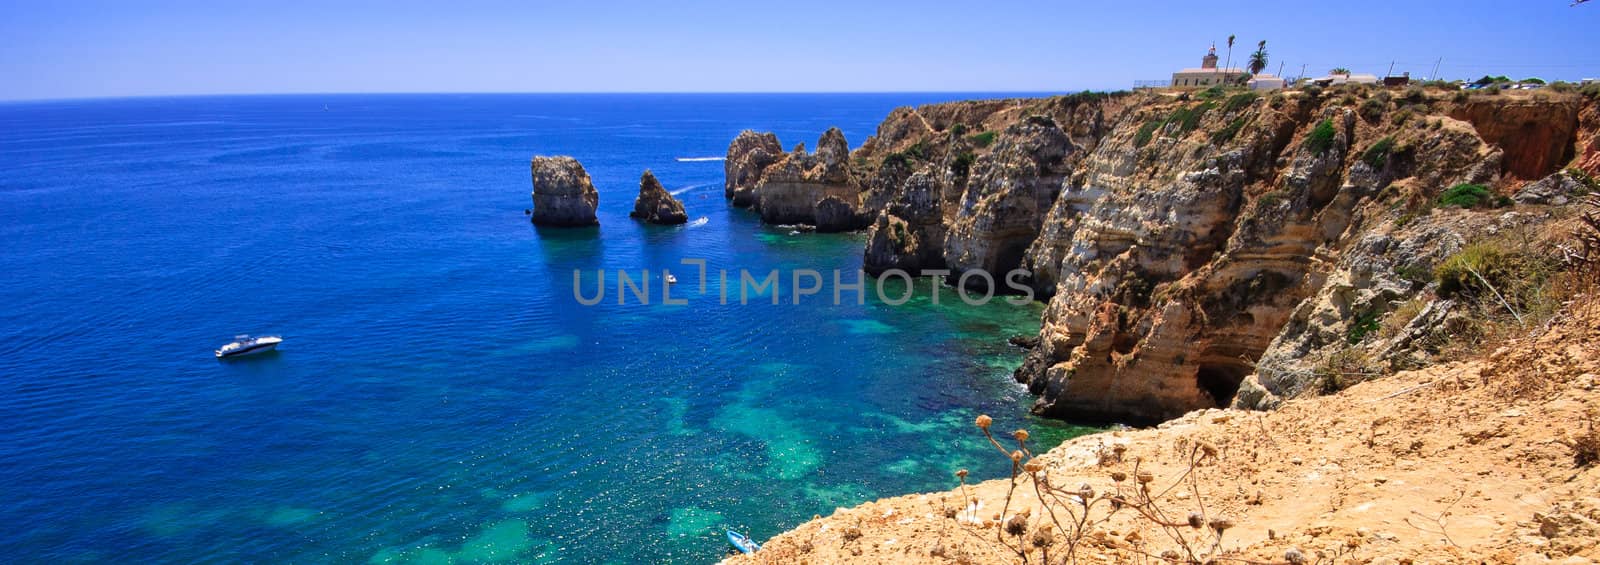 Algarve rock - coast in Portugal by anobis